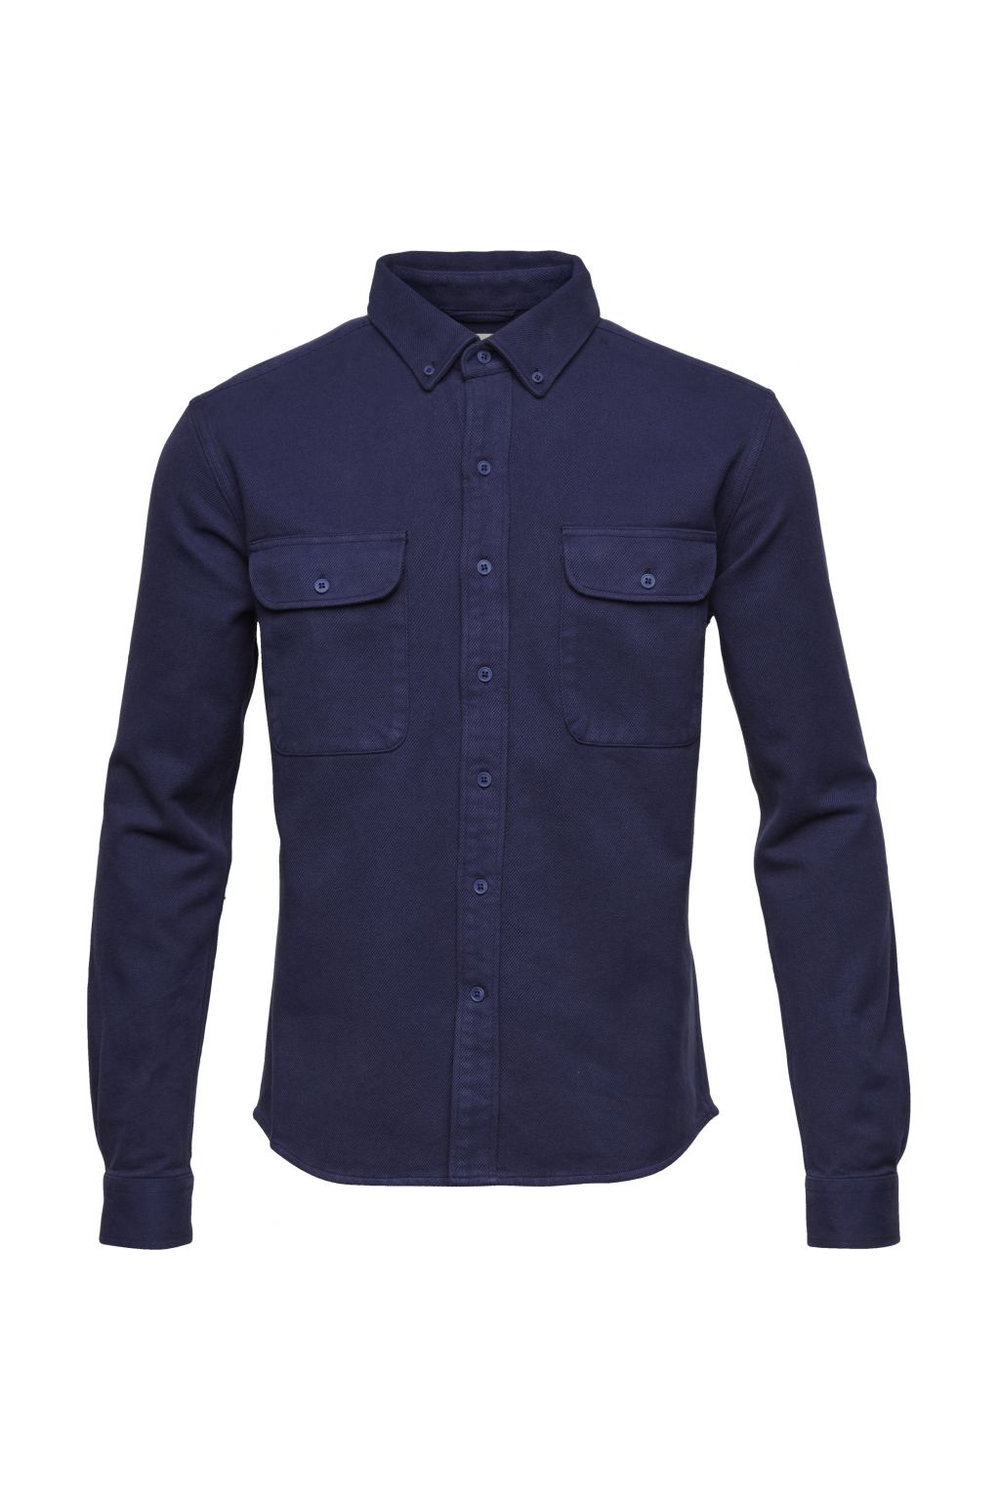 Organic Cotton Twill Shirt Men Clothing Long Sleeve Button Shirts